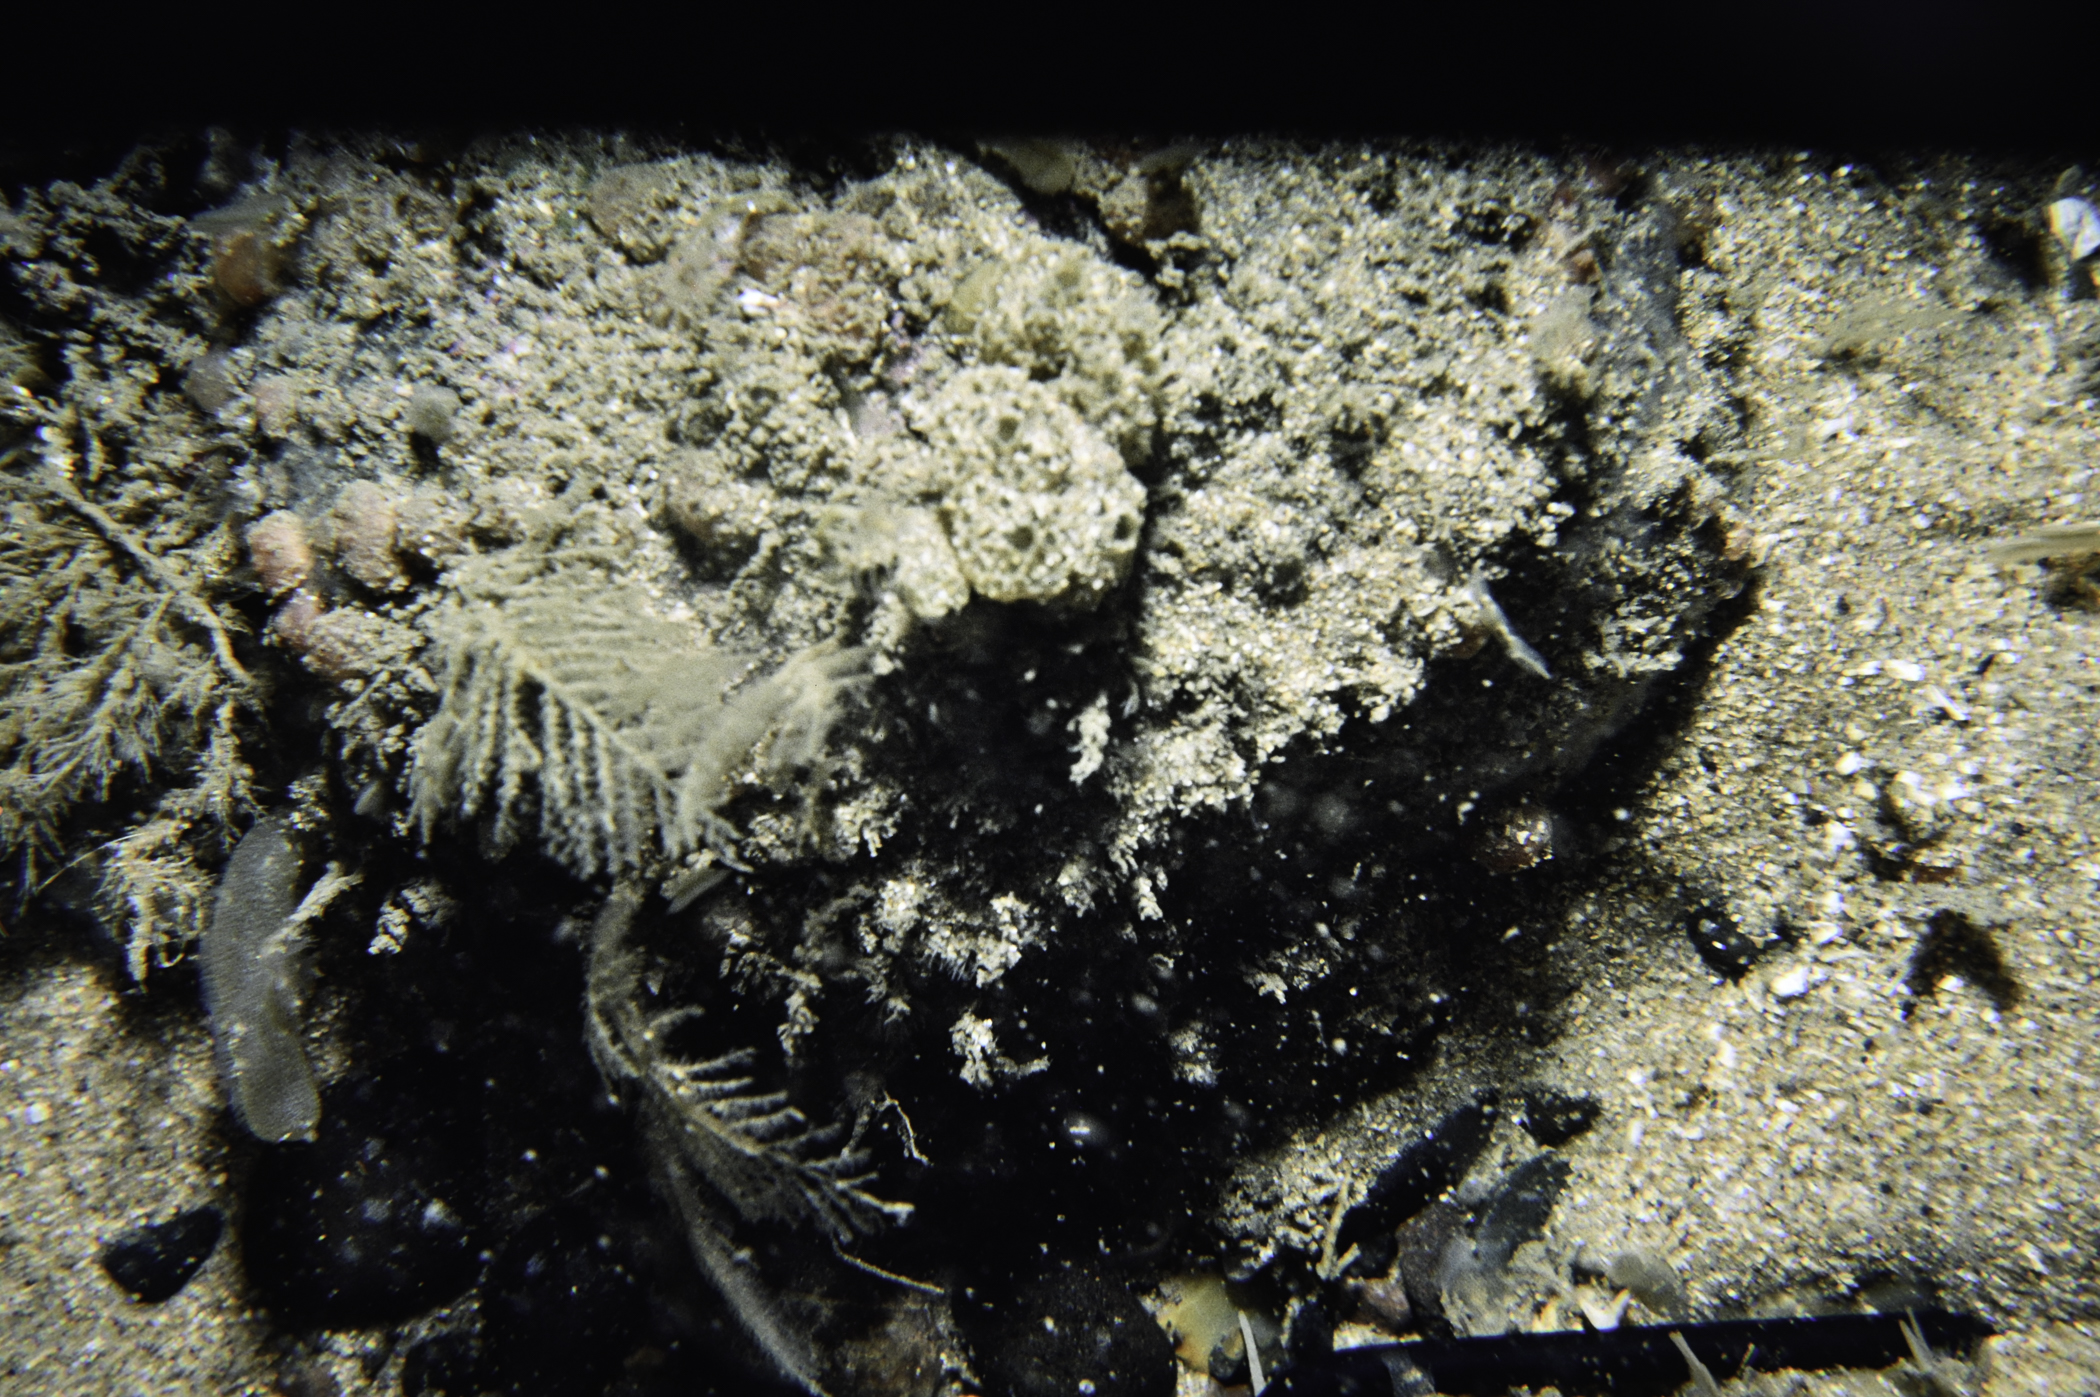 Halecium halecinum, Polyclinum aurantium. Site: W of Carrickarede Island. 